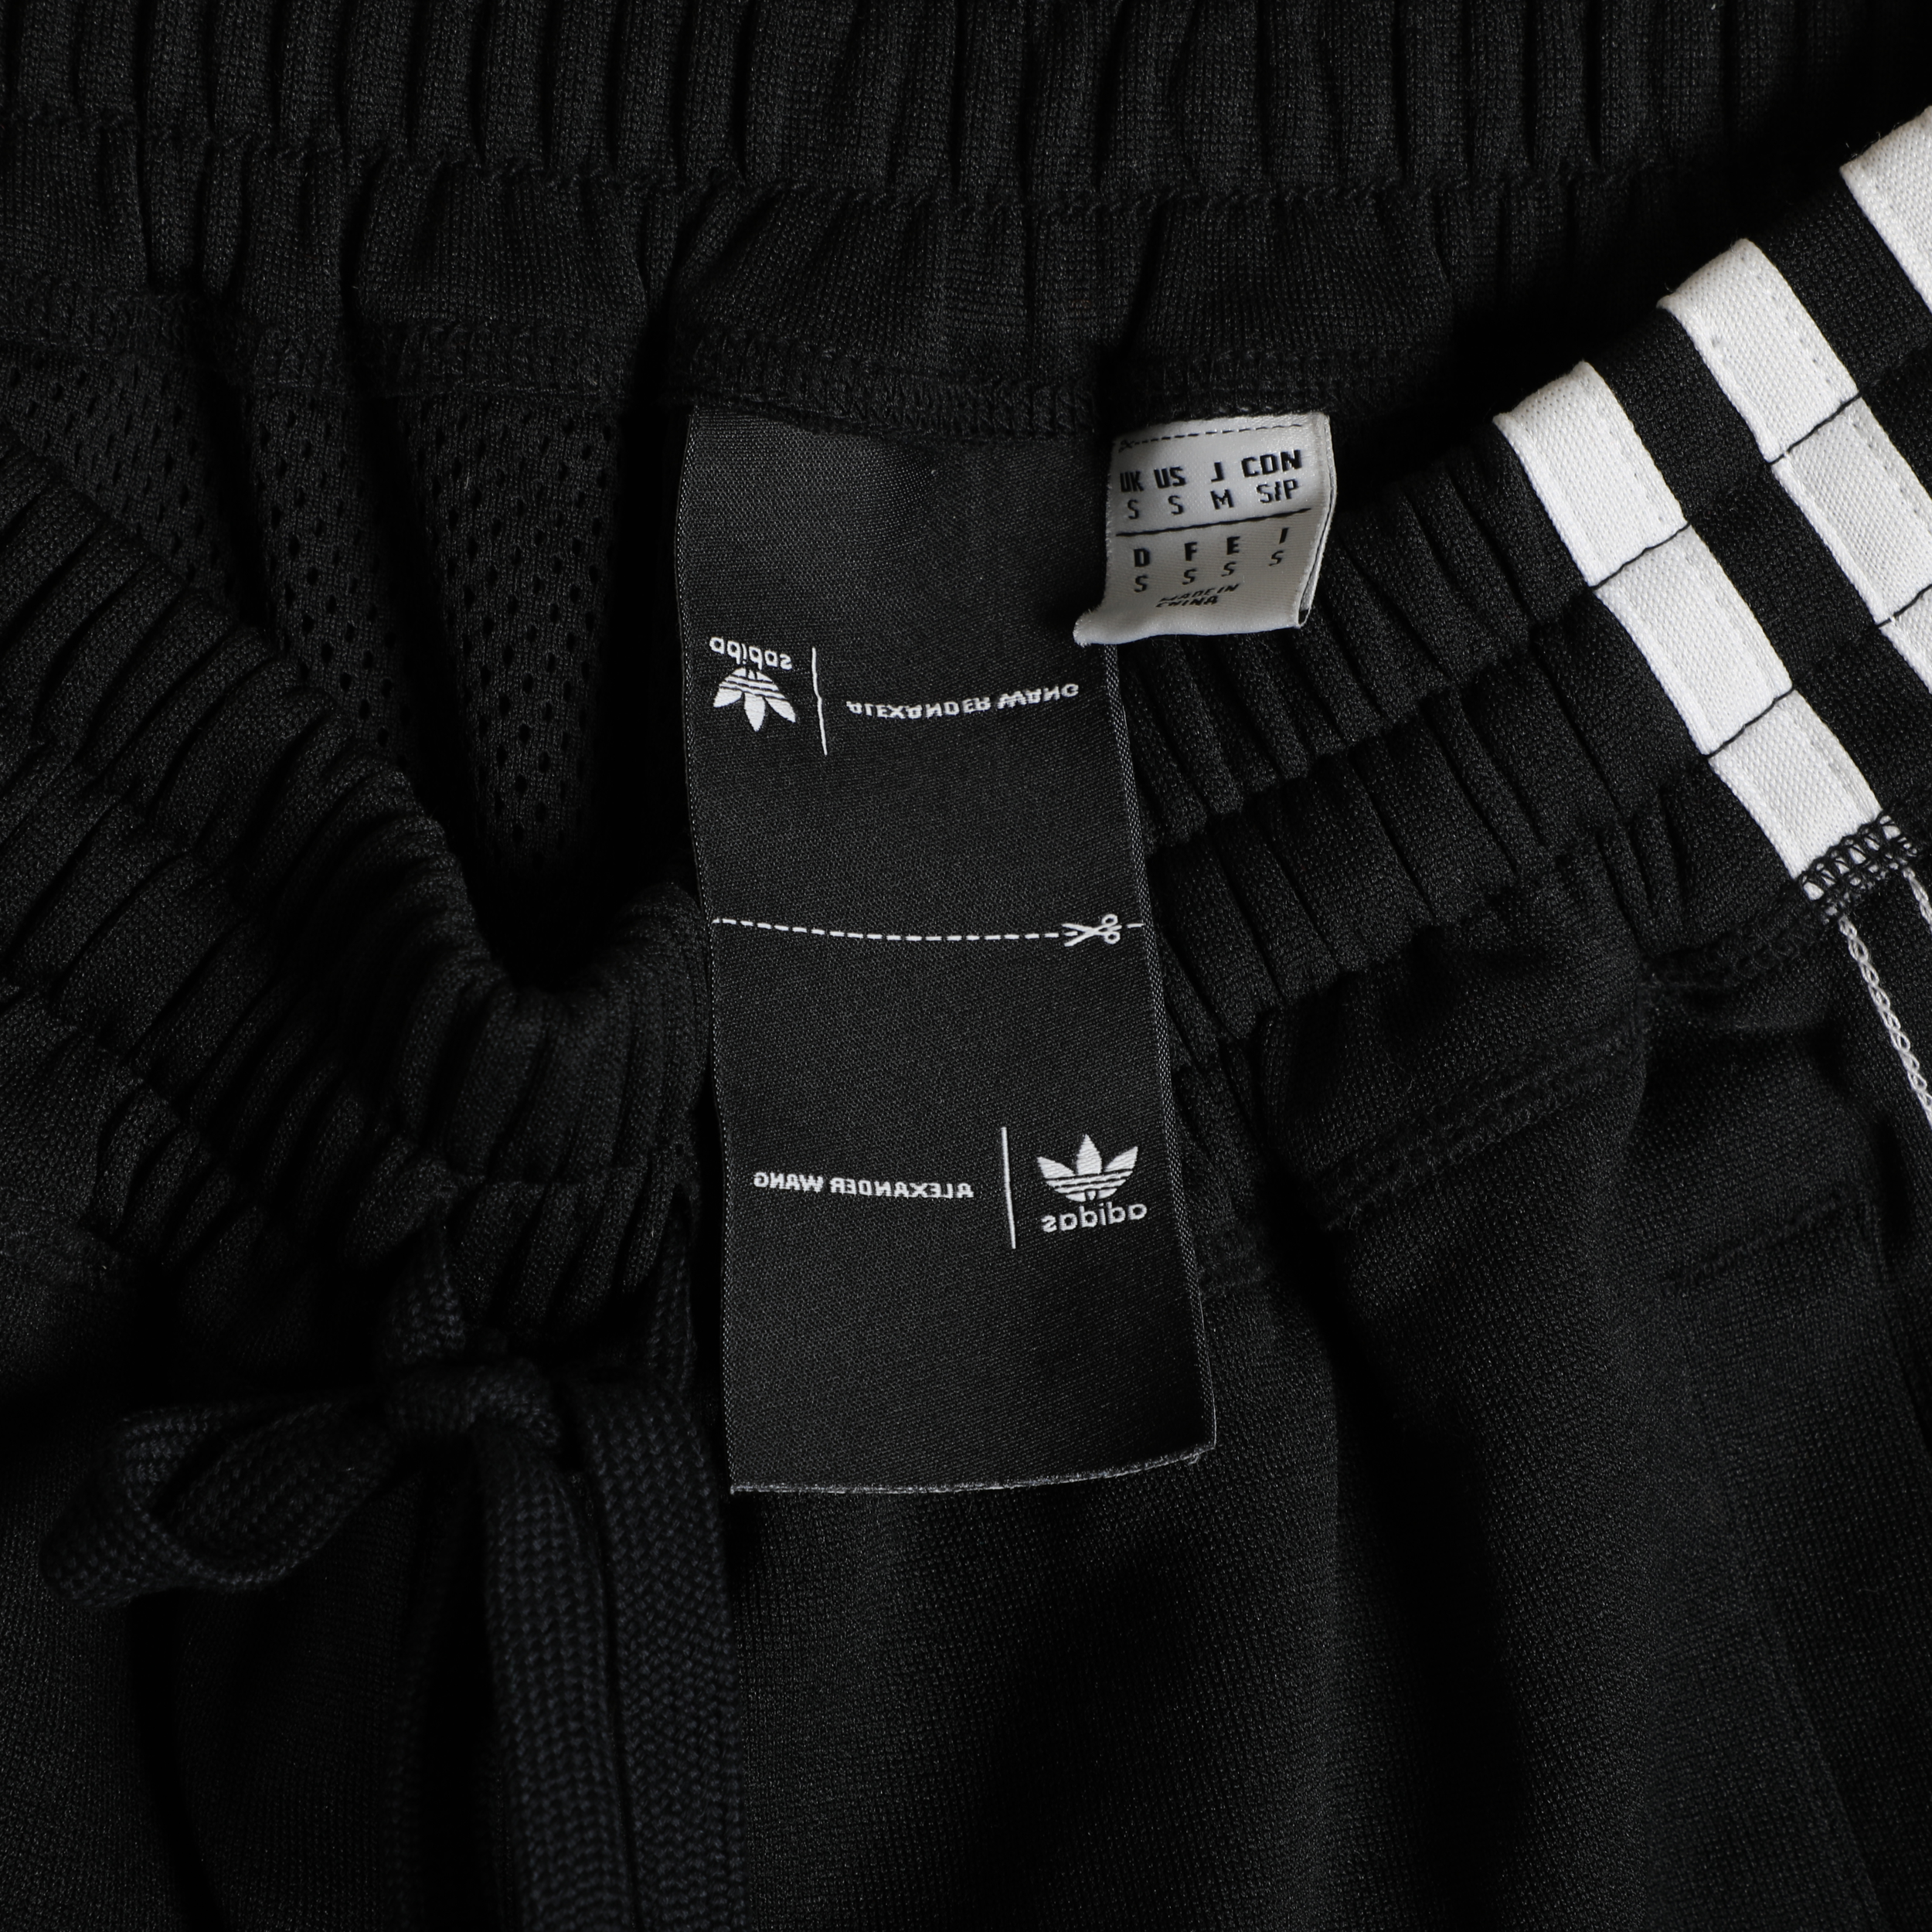 Berri Motley fascisme Style Paradise - Adidas x Alexander Wang Side Button Pants